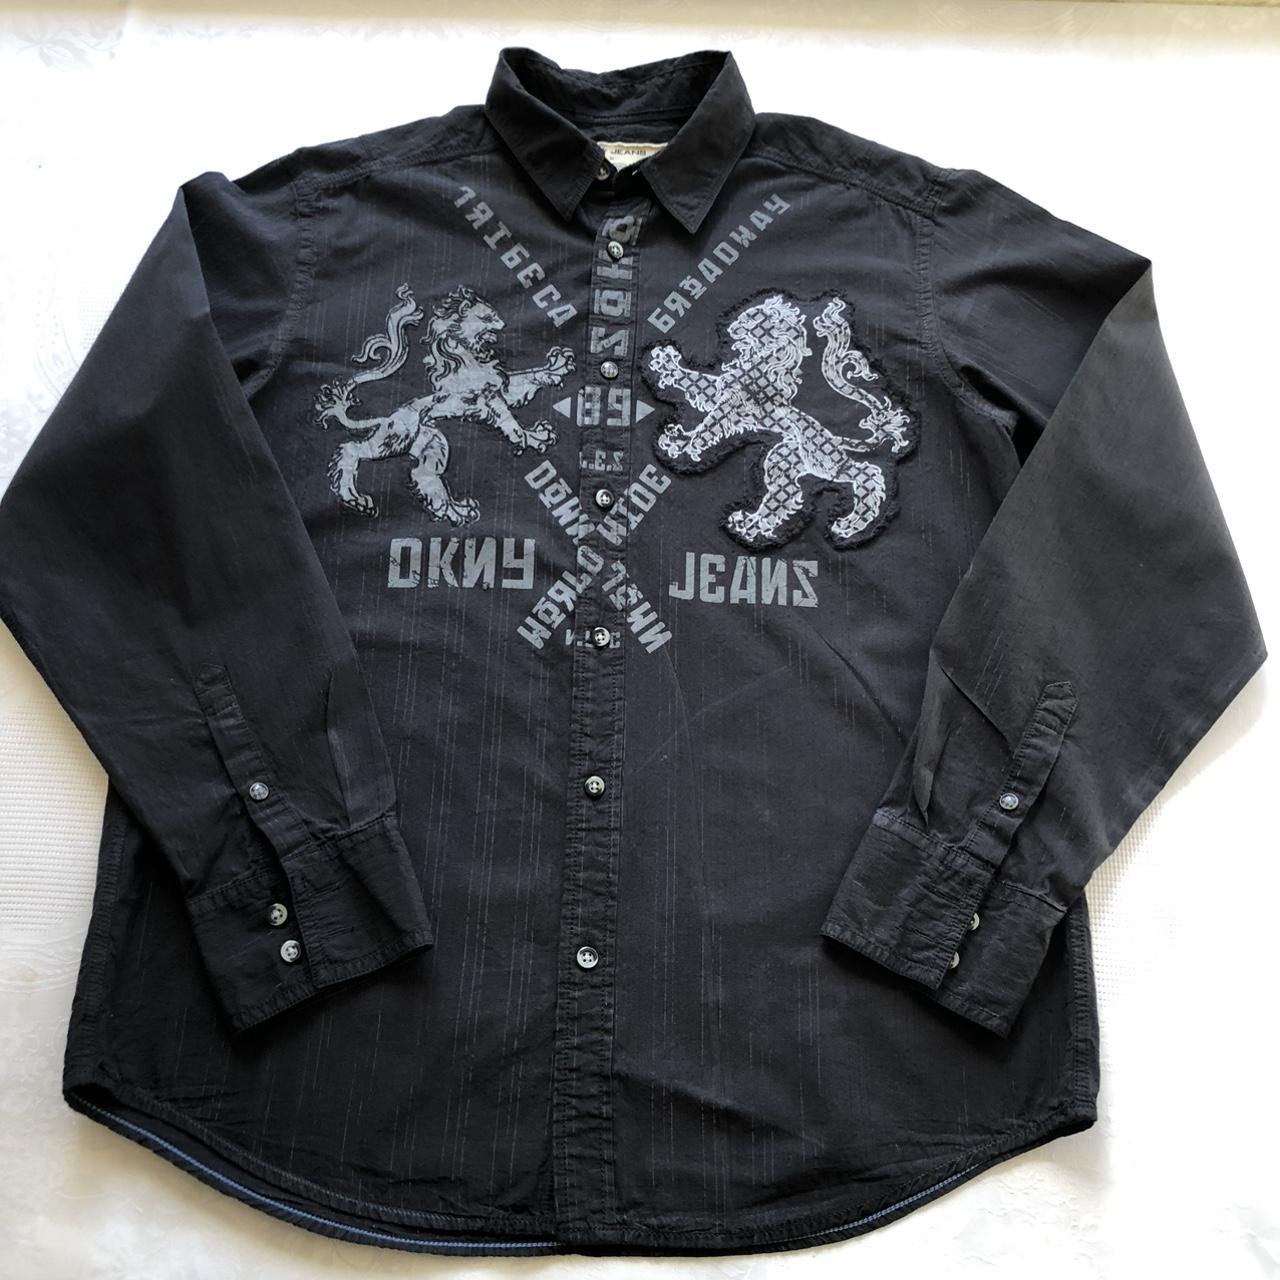 DKNY Girl Silver Metallic Long SKirt & Black Shirt Streetwear Look